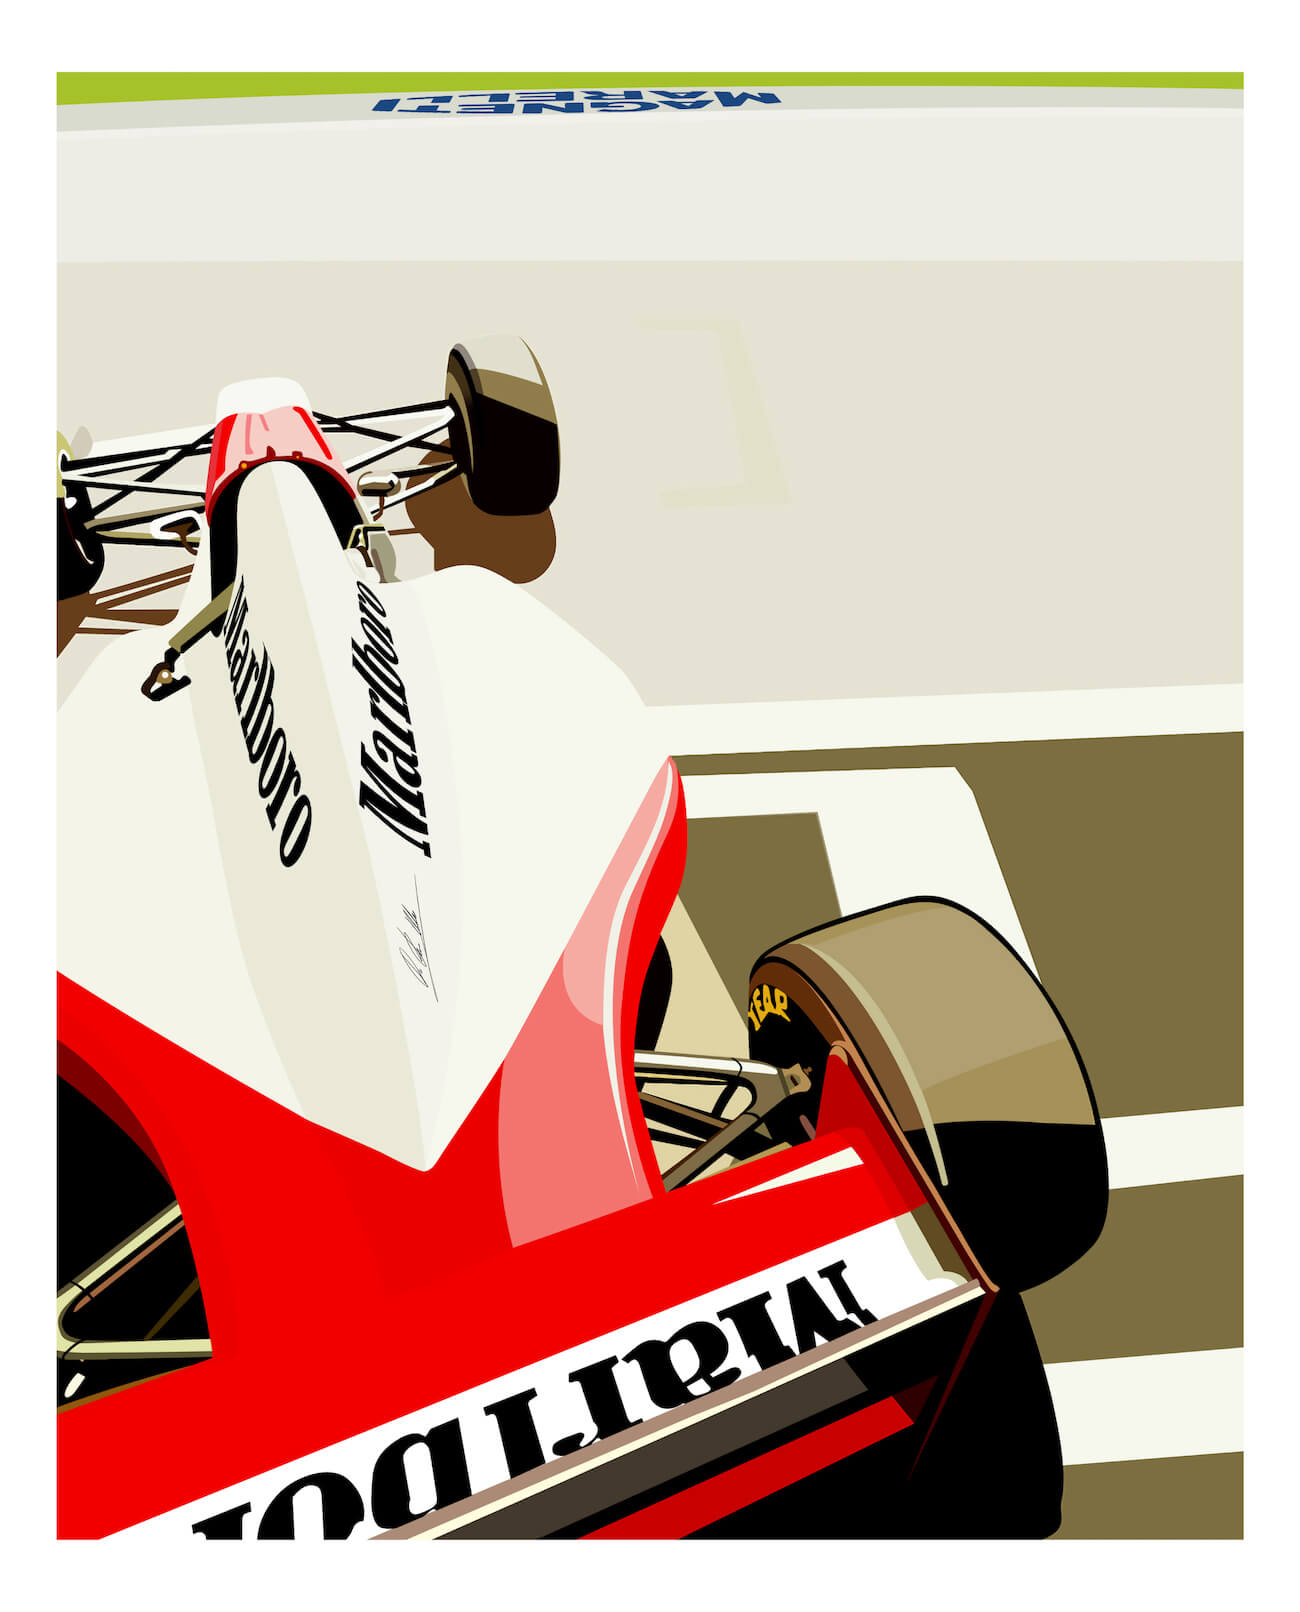 McLaren Senna Marlboro Livery